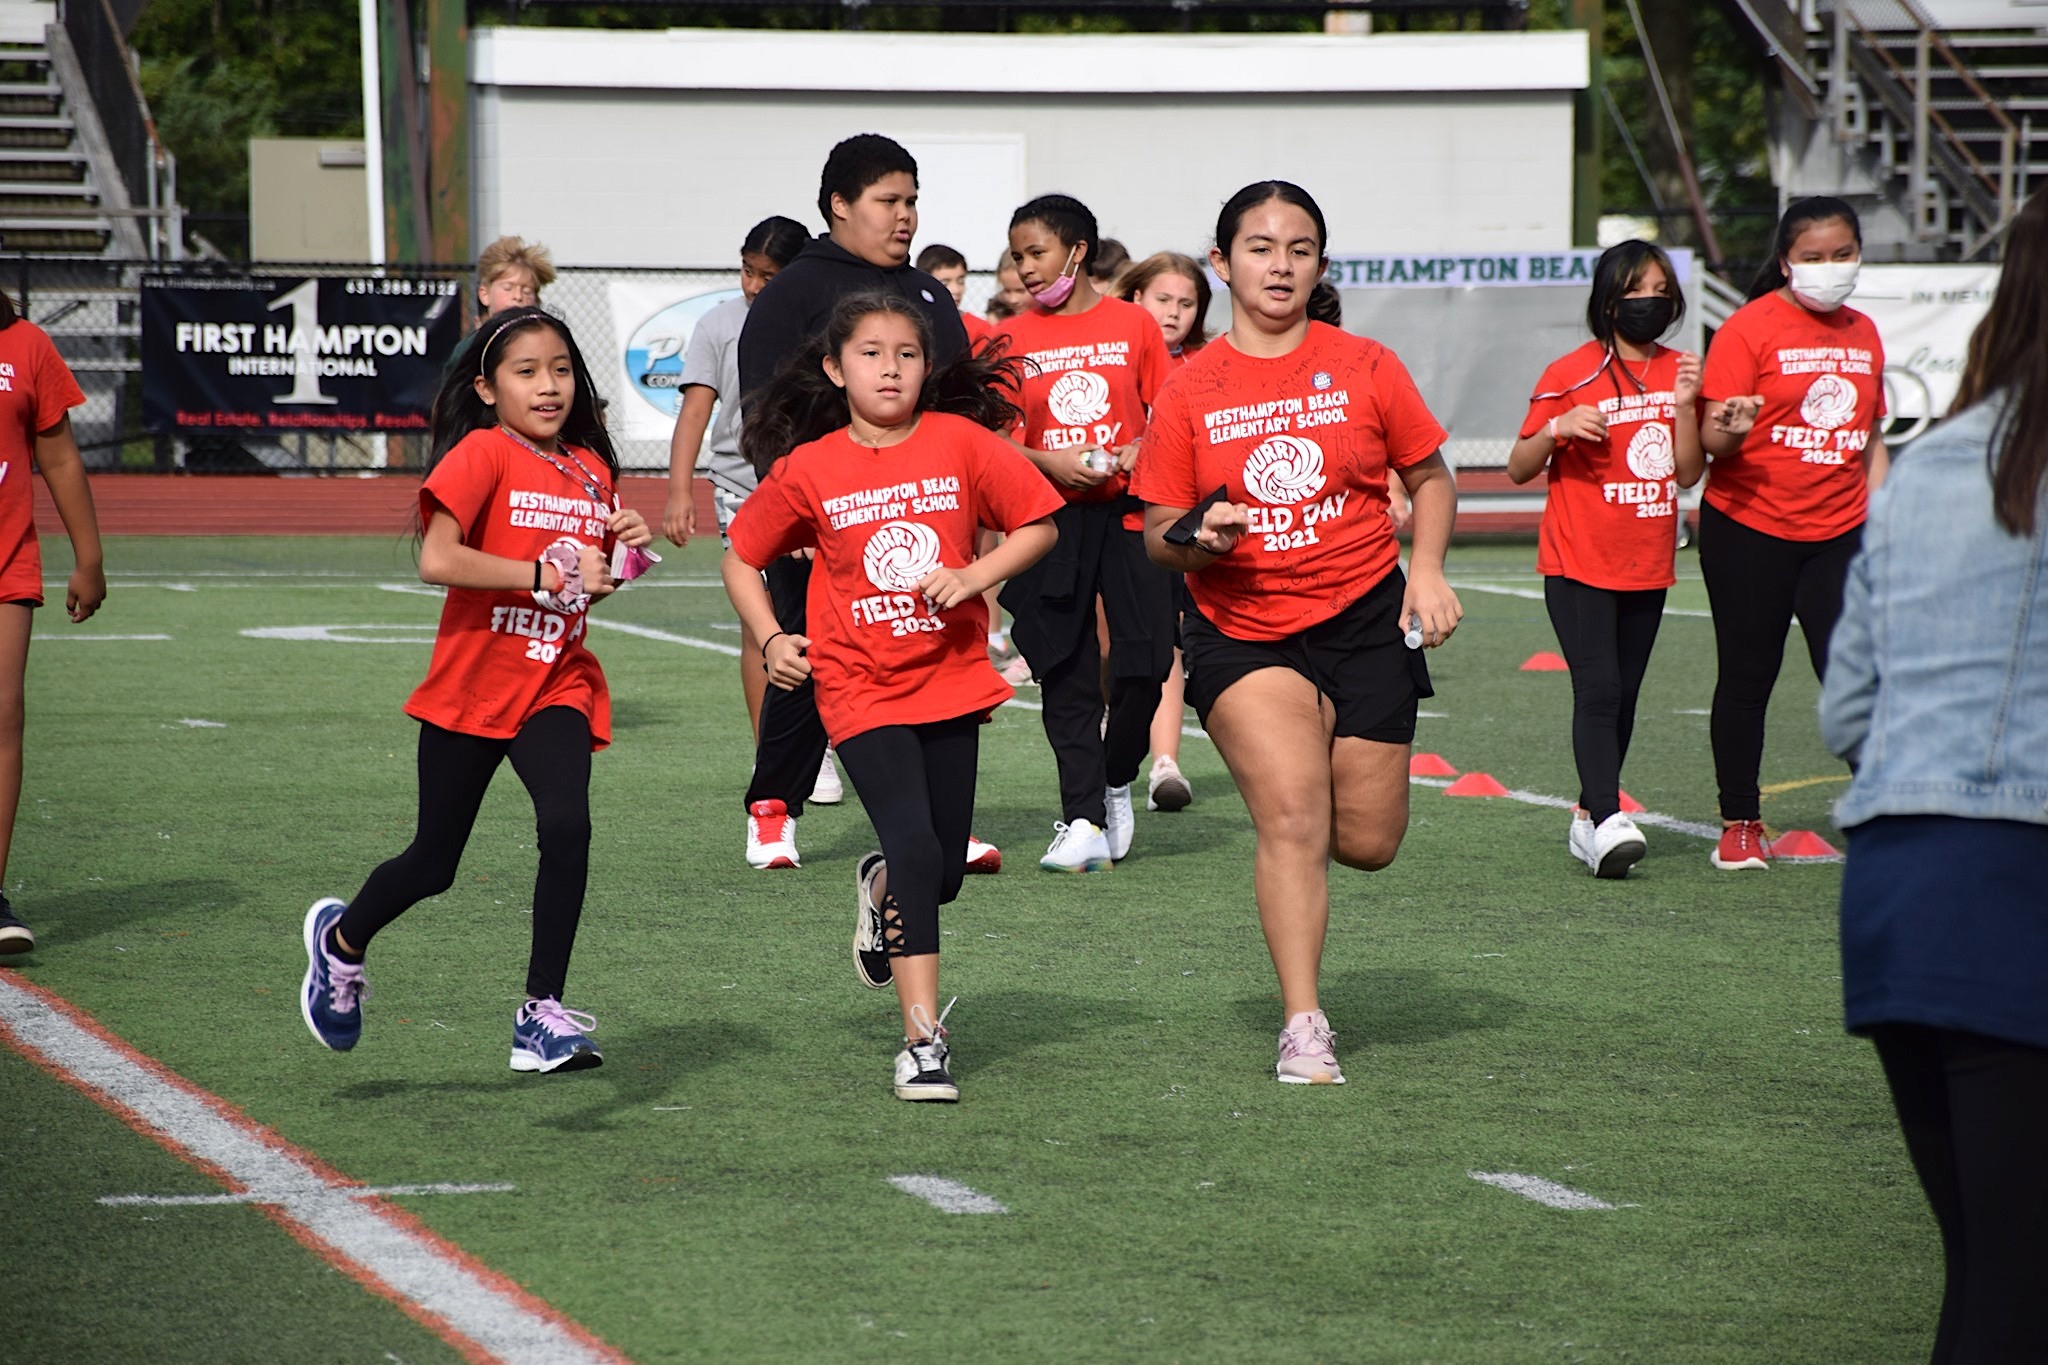 Westhampton Beach Elementary School students raised more than $30,000 for their school through the annual Hurricane Fun Run held Monday, September 27. WESTHAMPTON BEACH SCHOOL DISTRICT